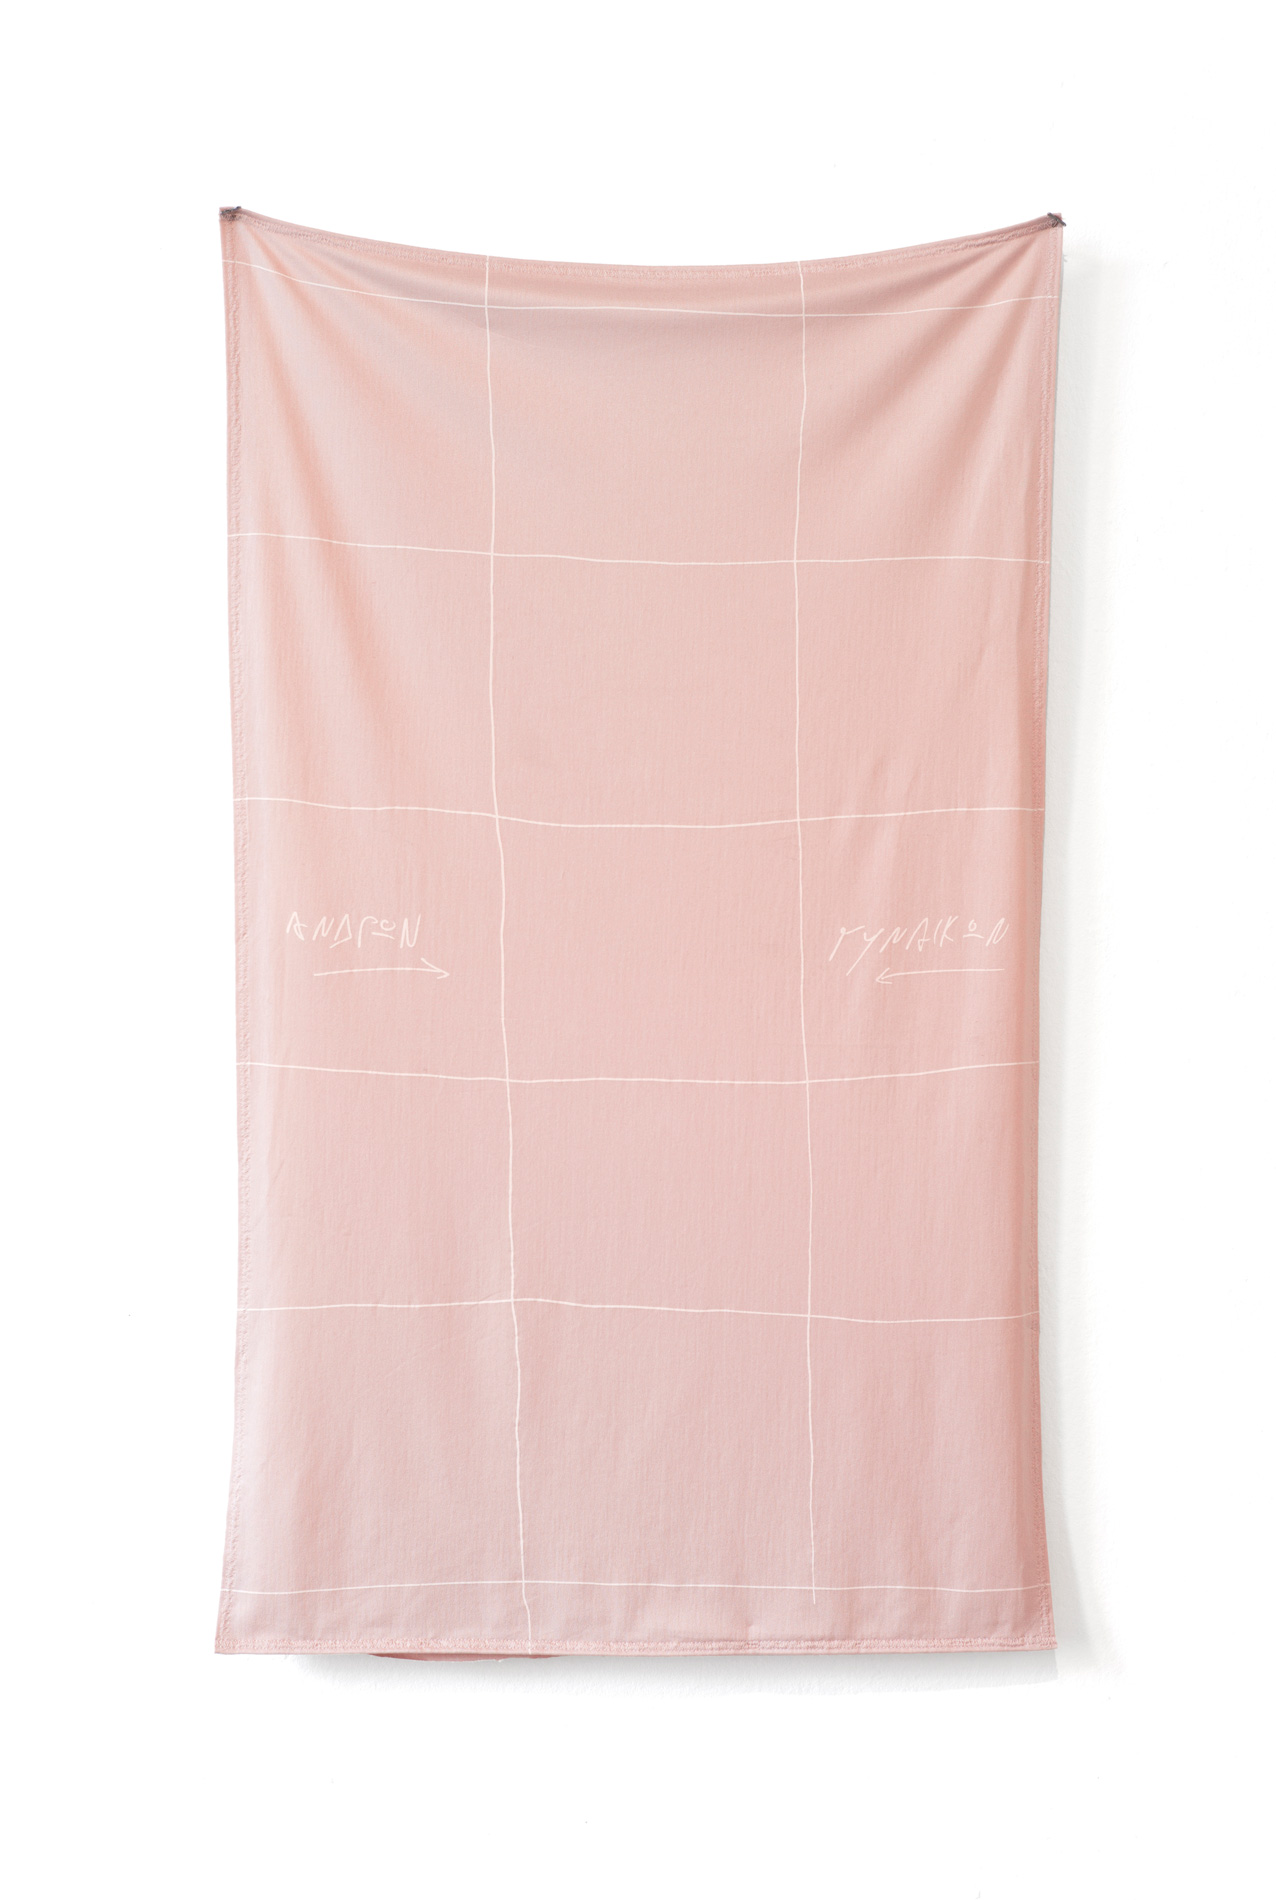 Tammo-Lünemann-·-„“-·-2018-·-Silkscreen-on-jersey-·-84-x-52-cm